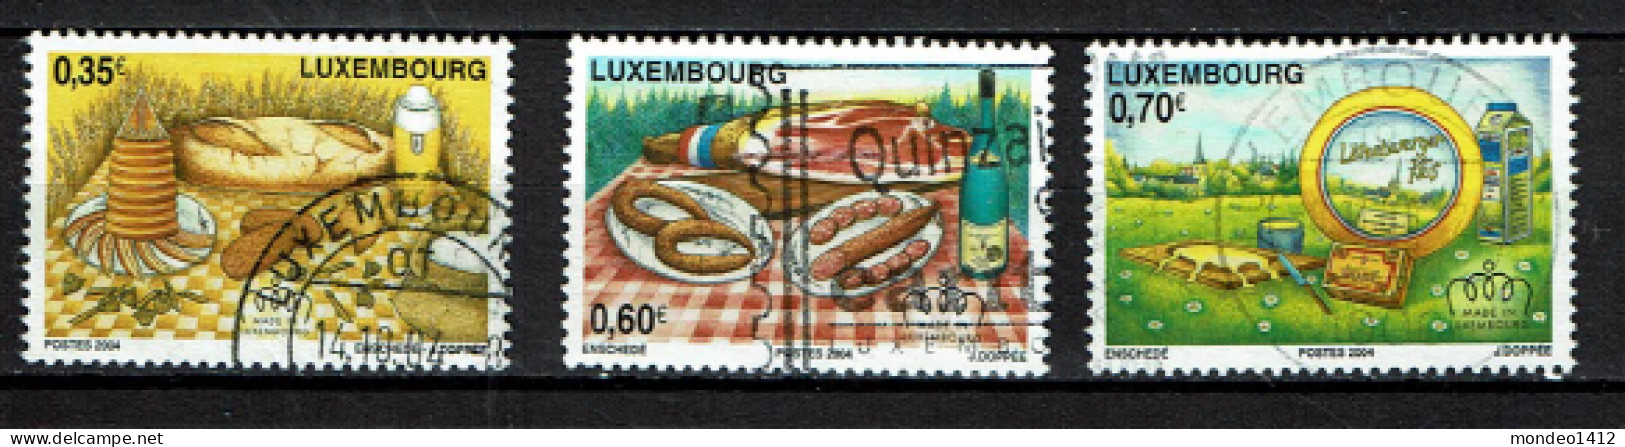 Luxembourg 2004 - YT 1599/1601 - Gastronomie, Gastronomy - Usati